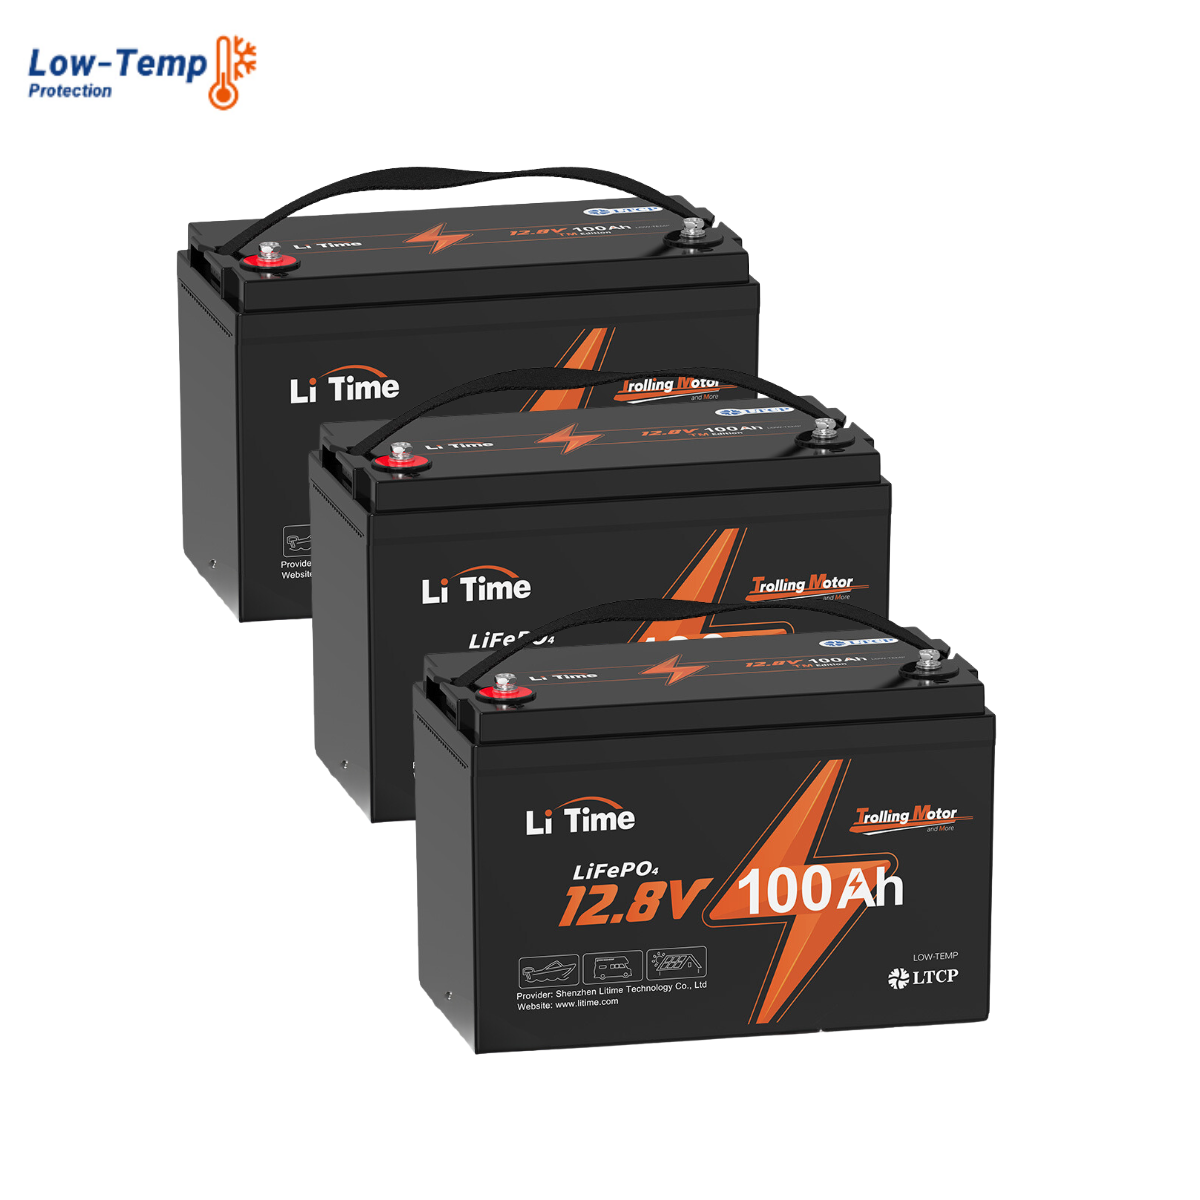 LiFePO4 Akku 36V 50Ah 50A Lithium-Eisen-Phosphat Batterie, 779,00 €